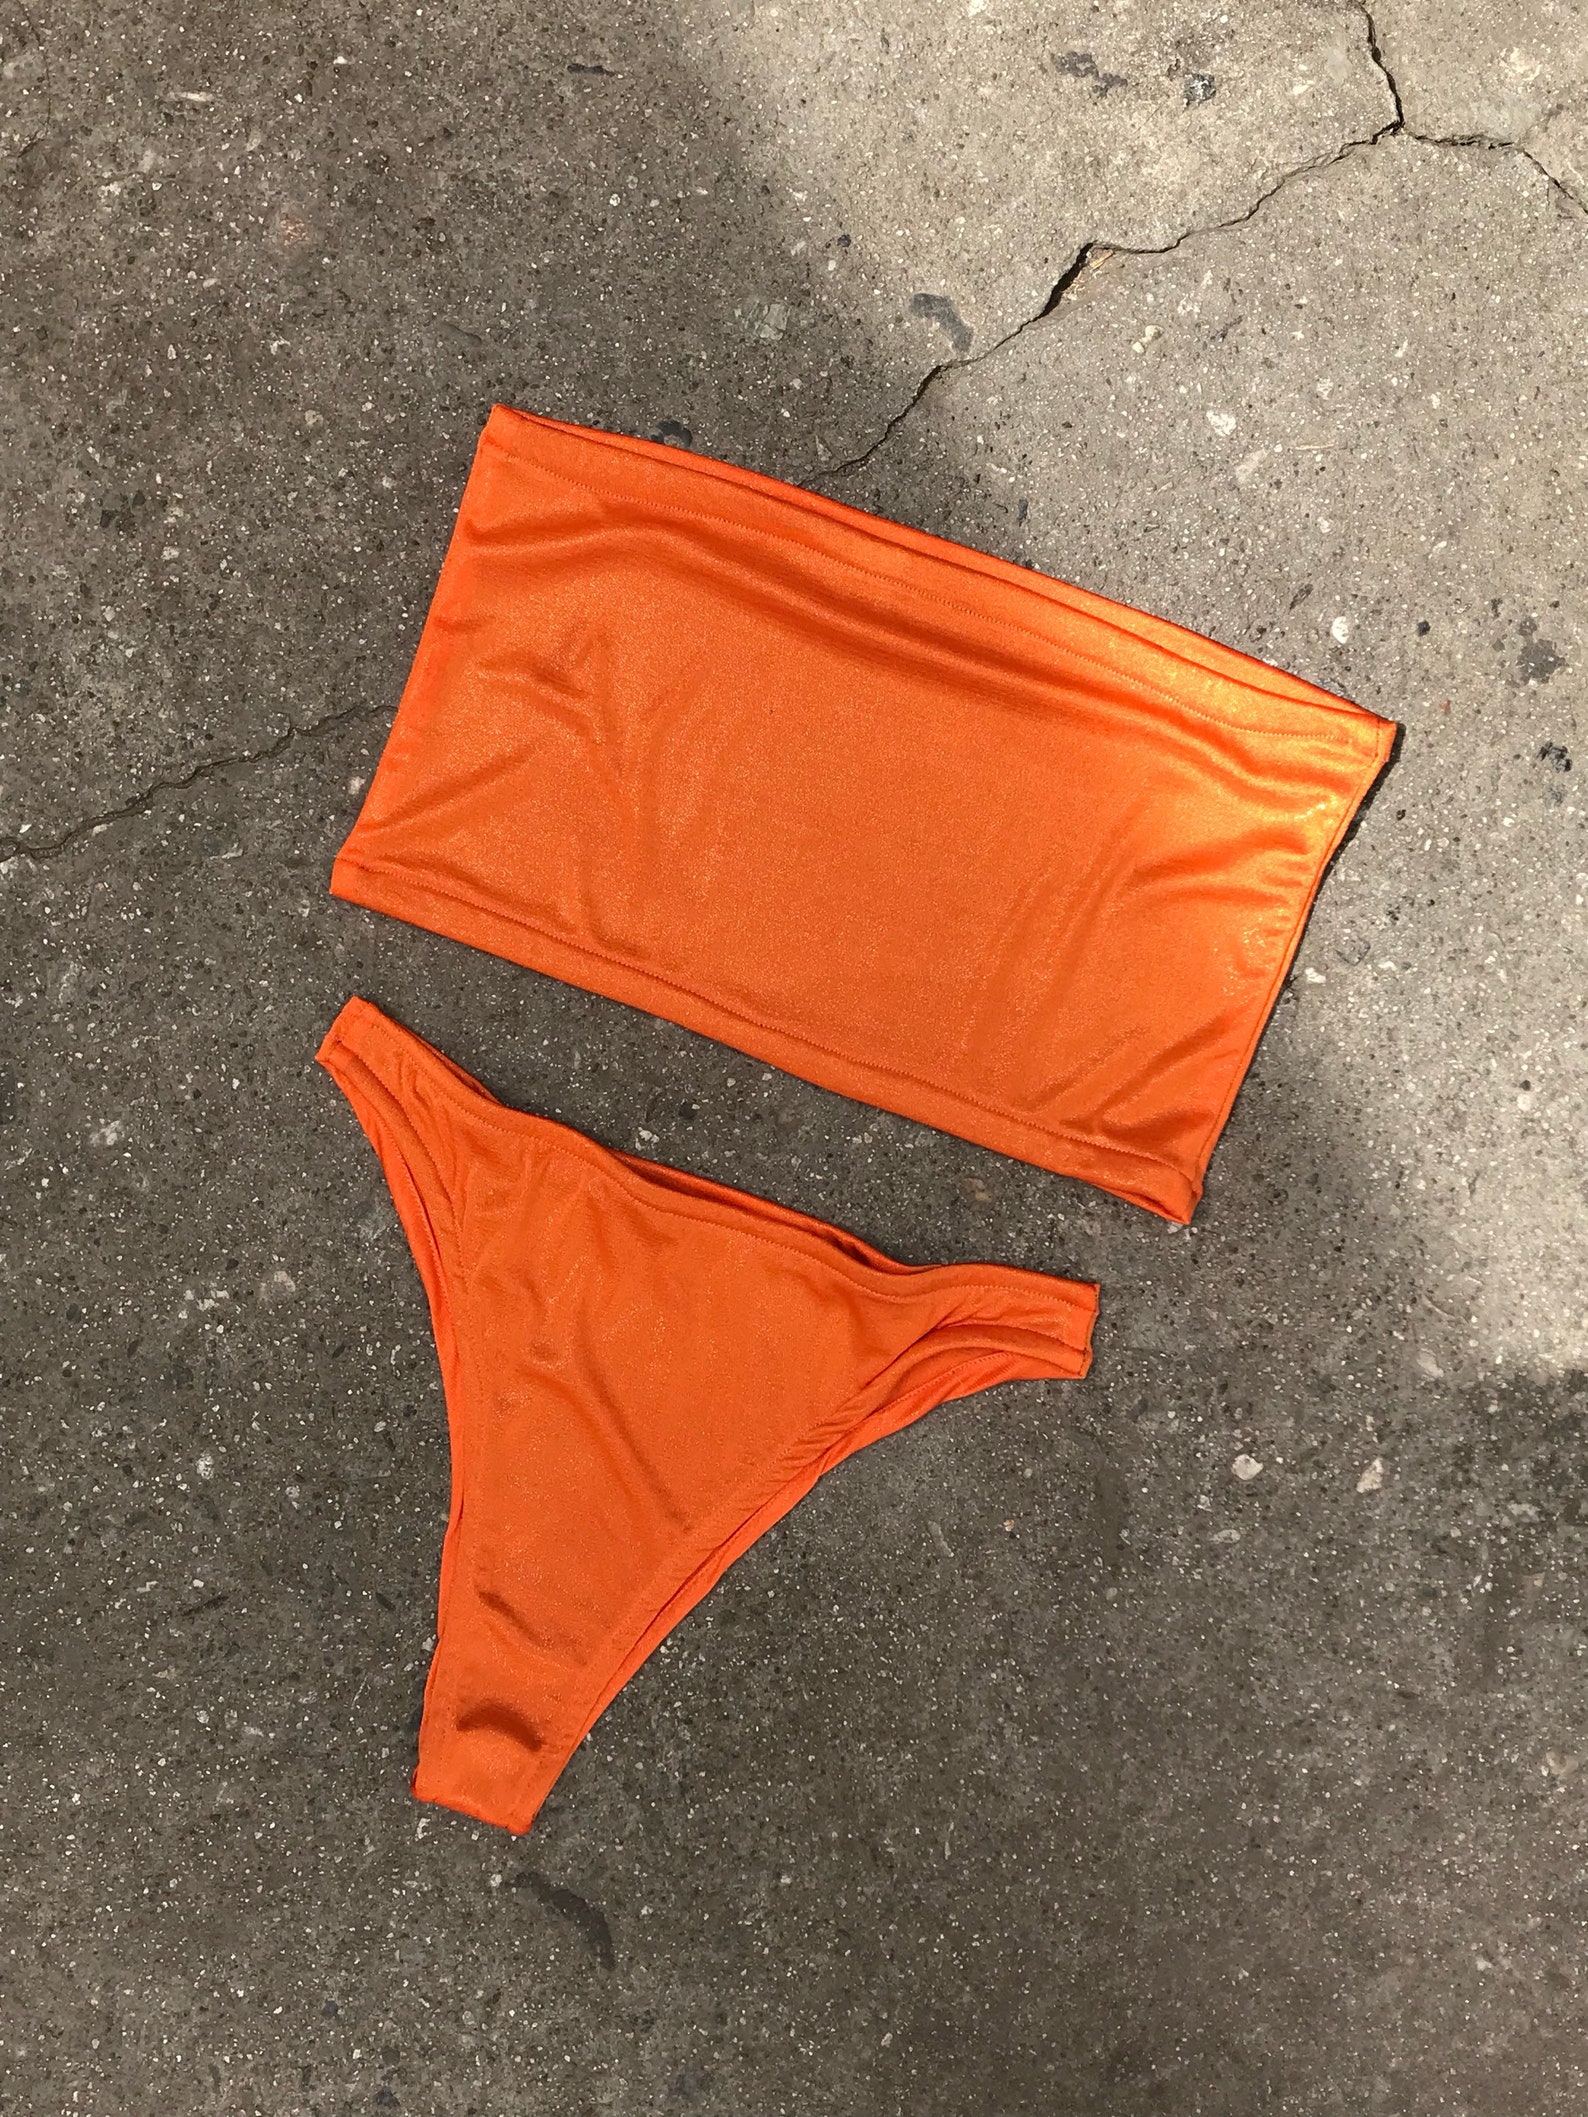 Shimmer Orange 2 Piece Bikini Set Bikini Sexy Bikini | Etsy